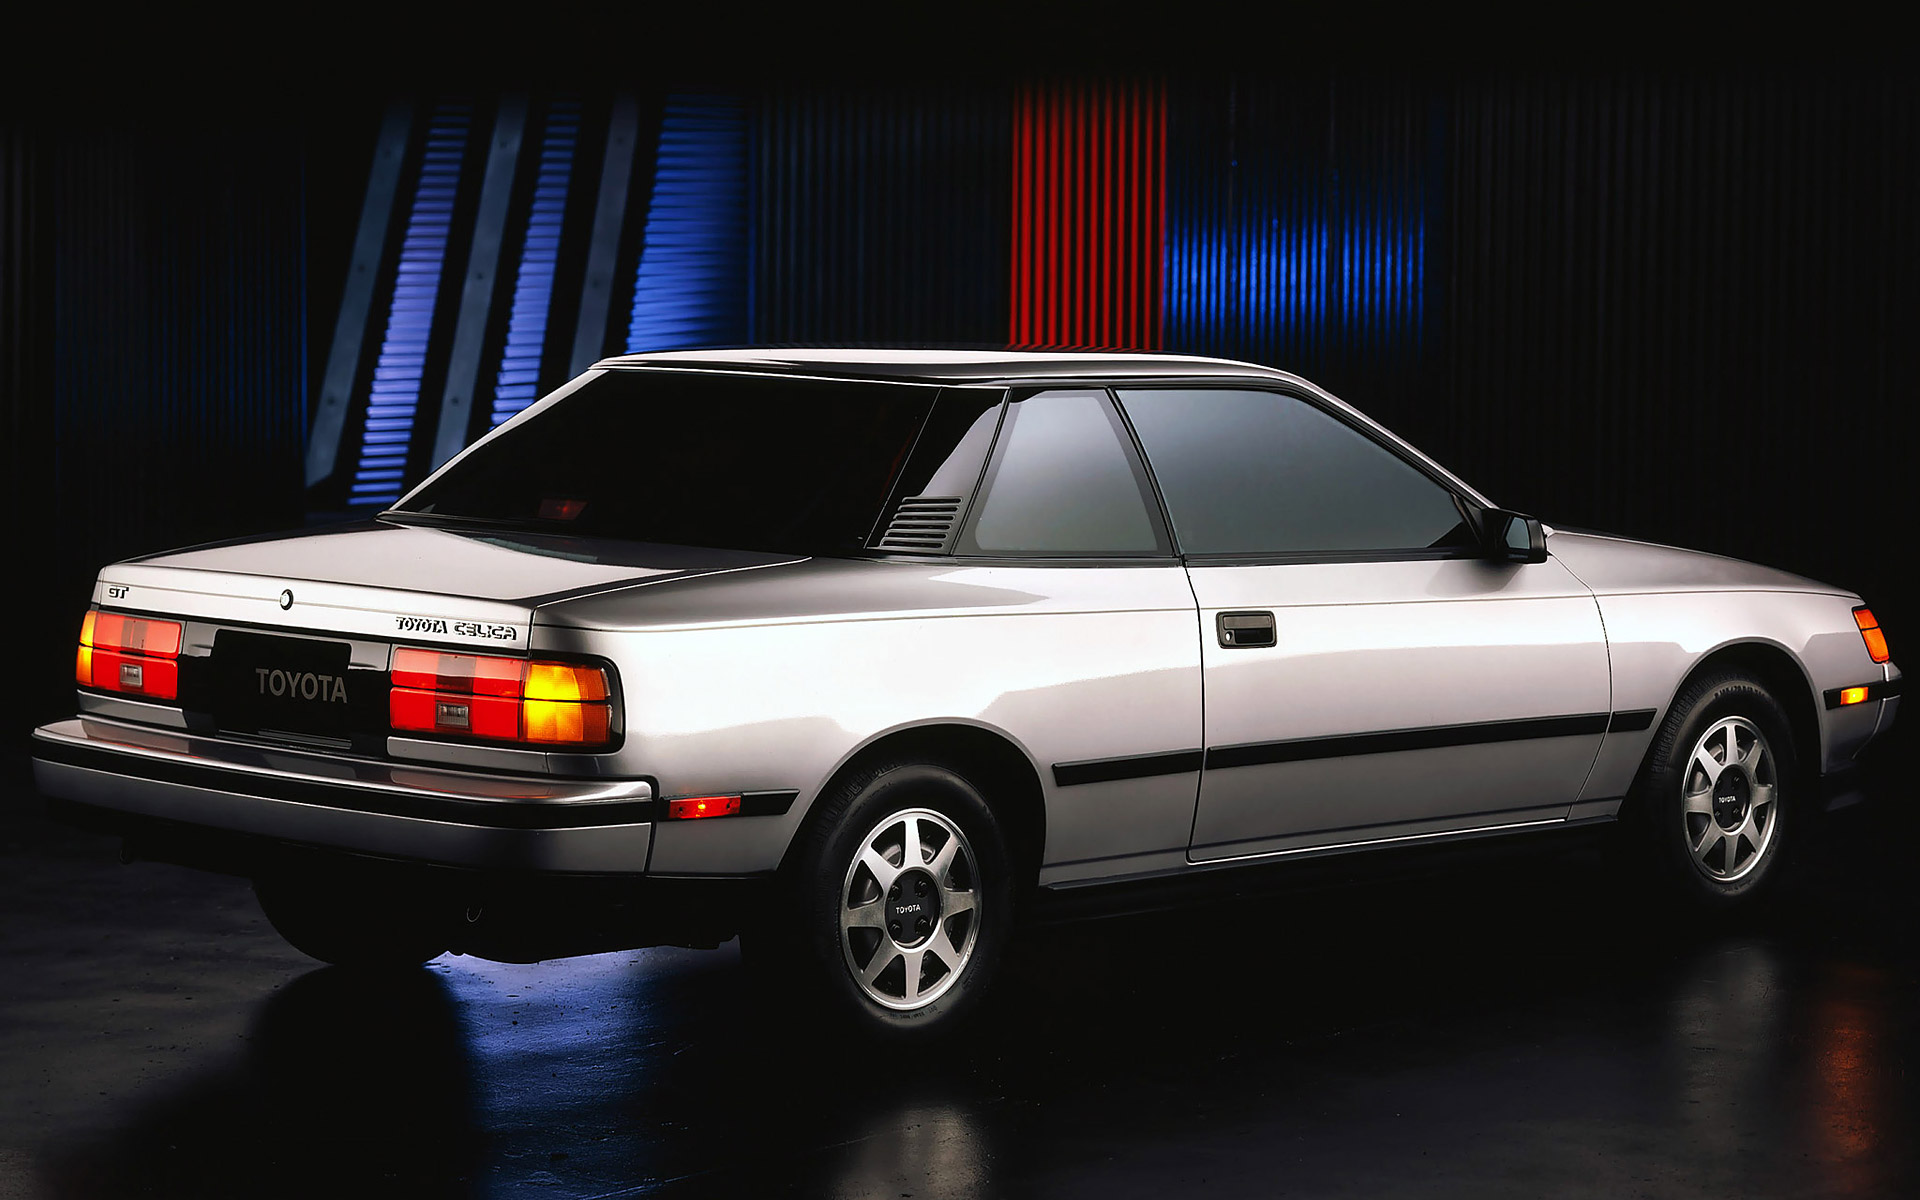  1988 Toyota Celica Wallpaper.